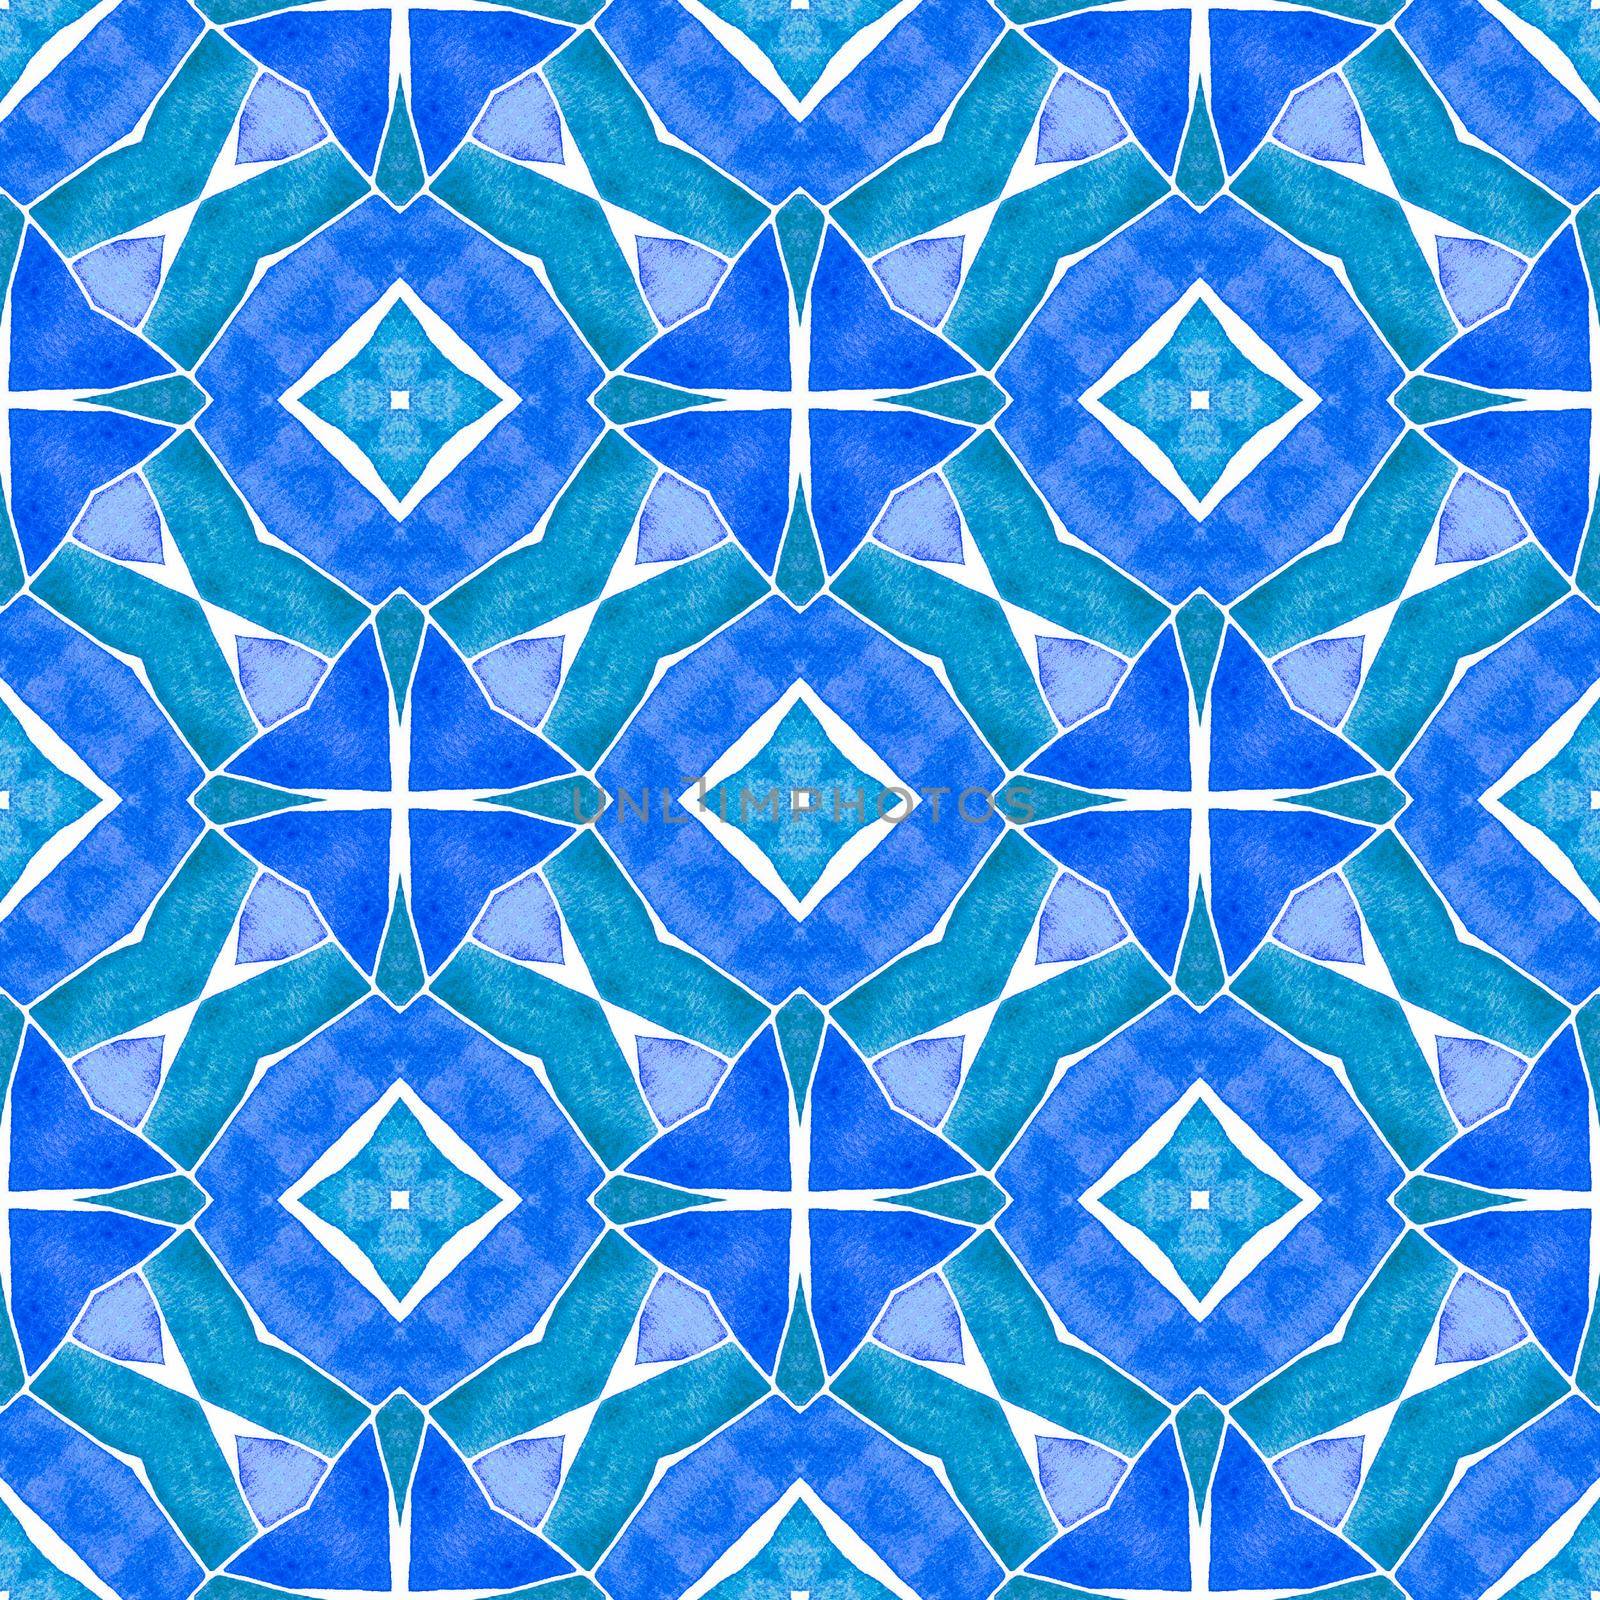 Green geometric chevron watercolor border. Blue fetching boho chic summer design. Textile ready captivating print, swimwear fabric, wallpaper, wrapping. Chevron watercolor pattern.